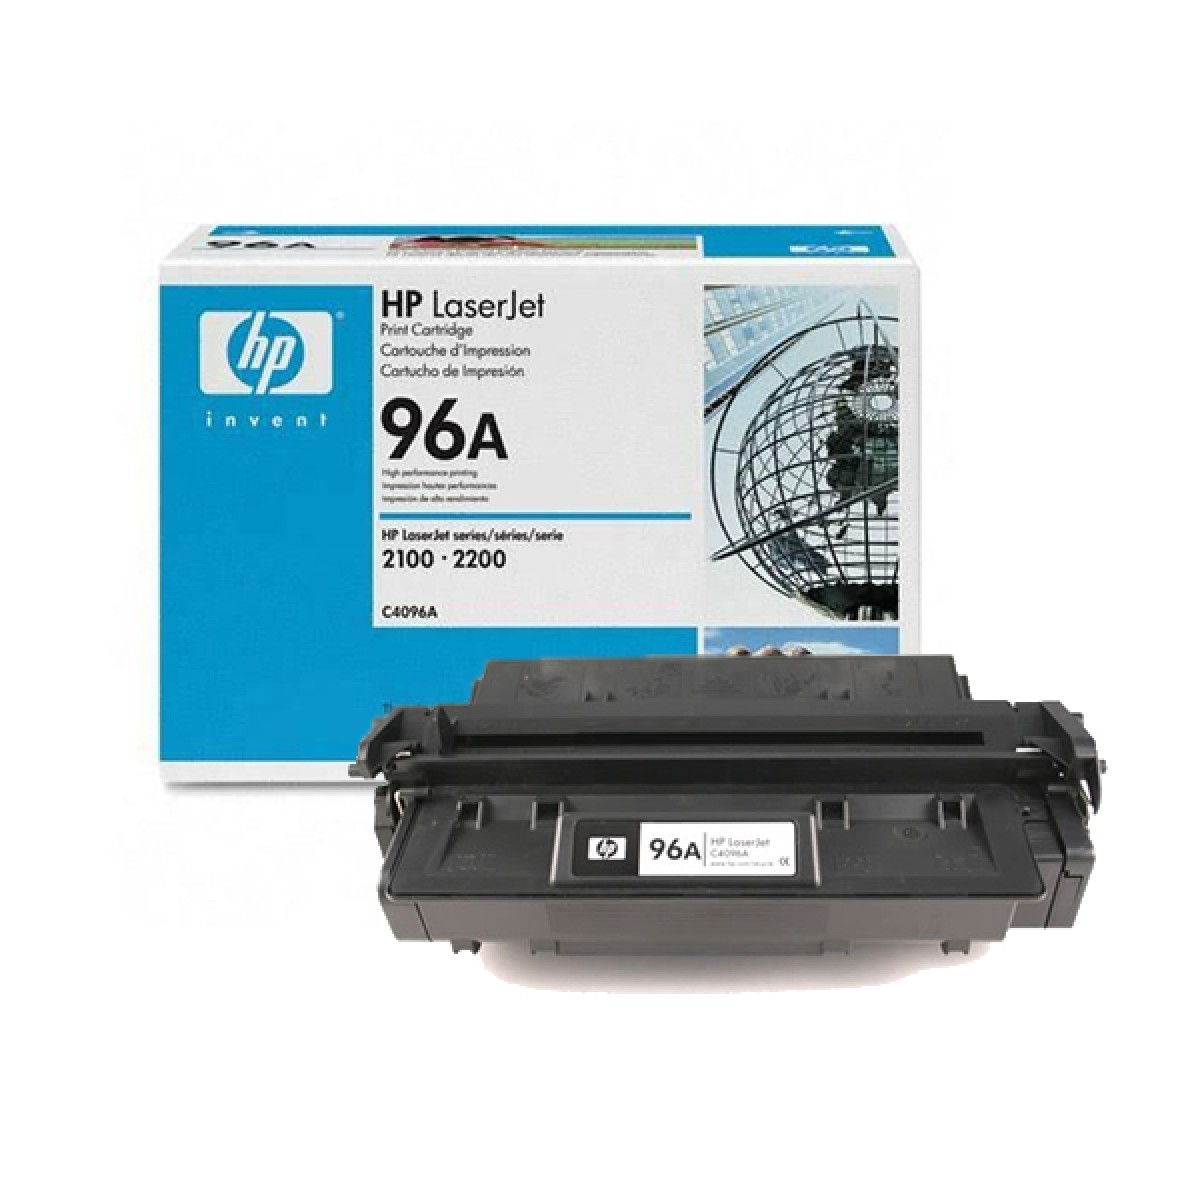 HP No 96A Laser Cartridge